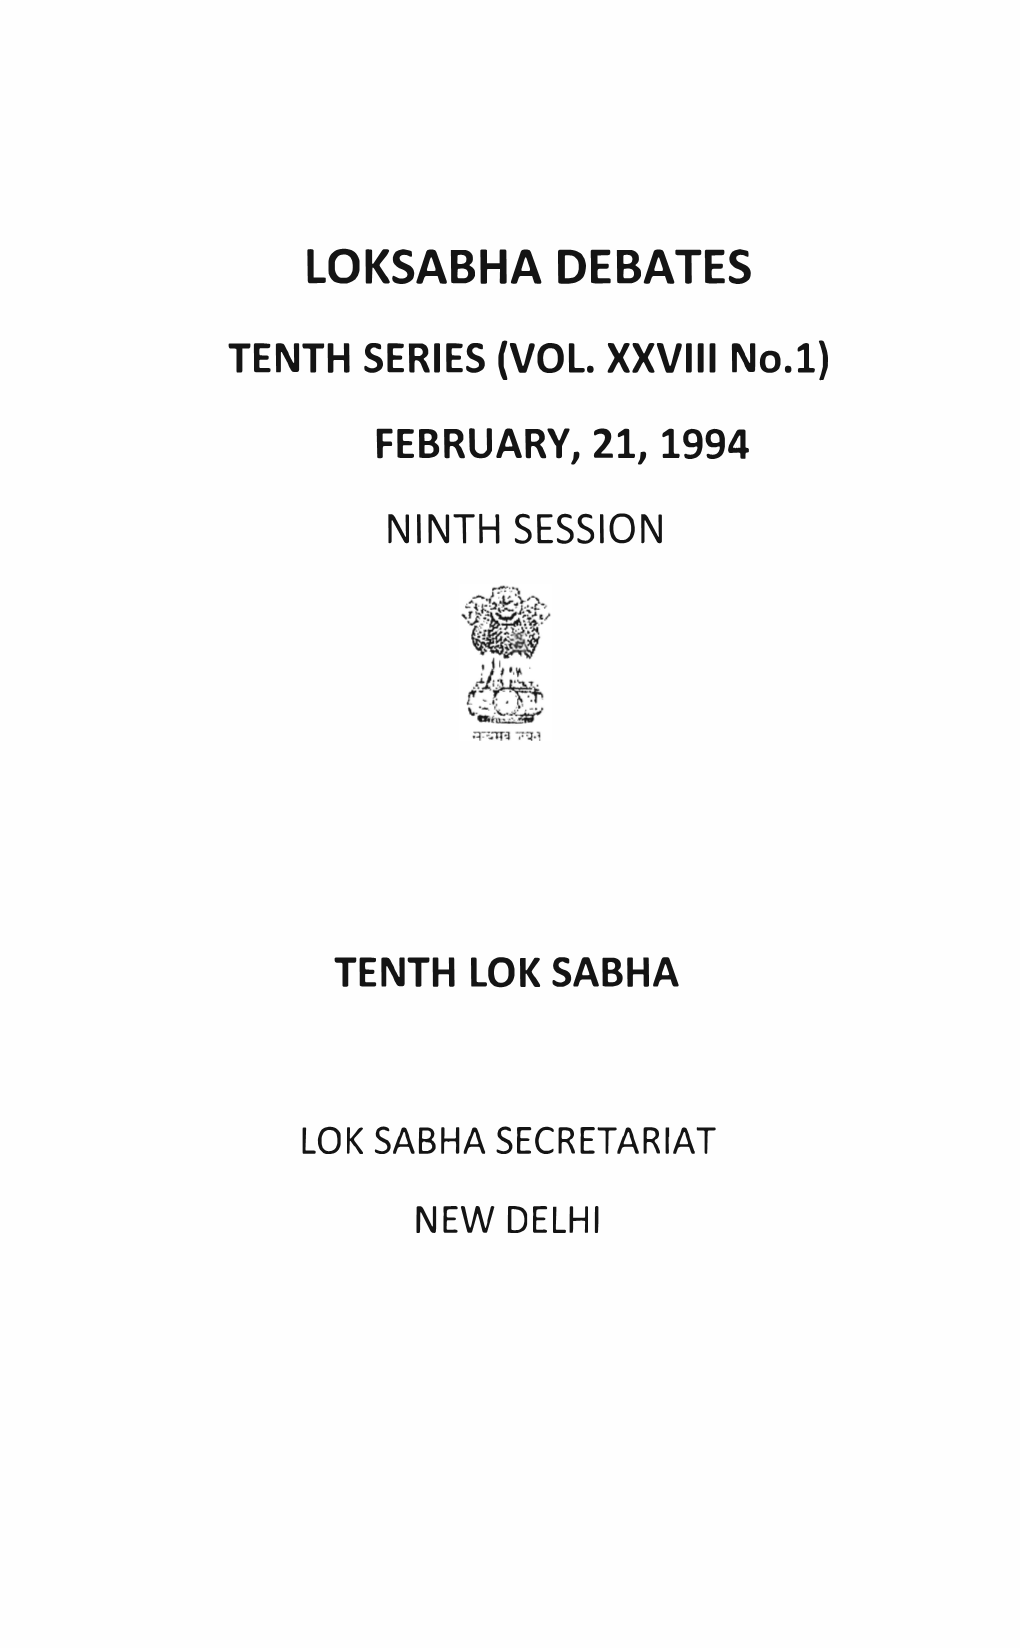 Loksabha Debates Tenth Series (Vol